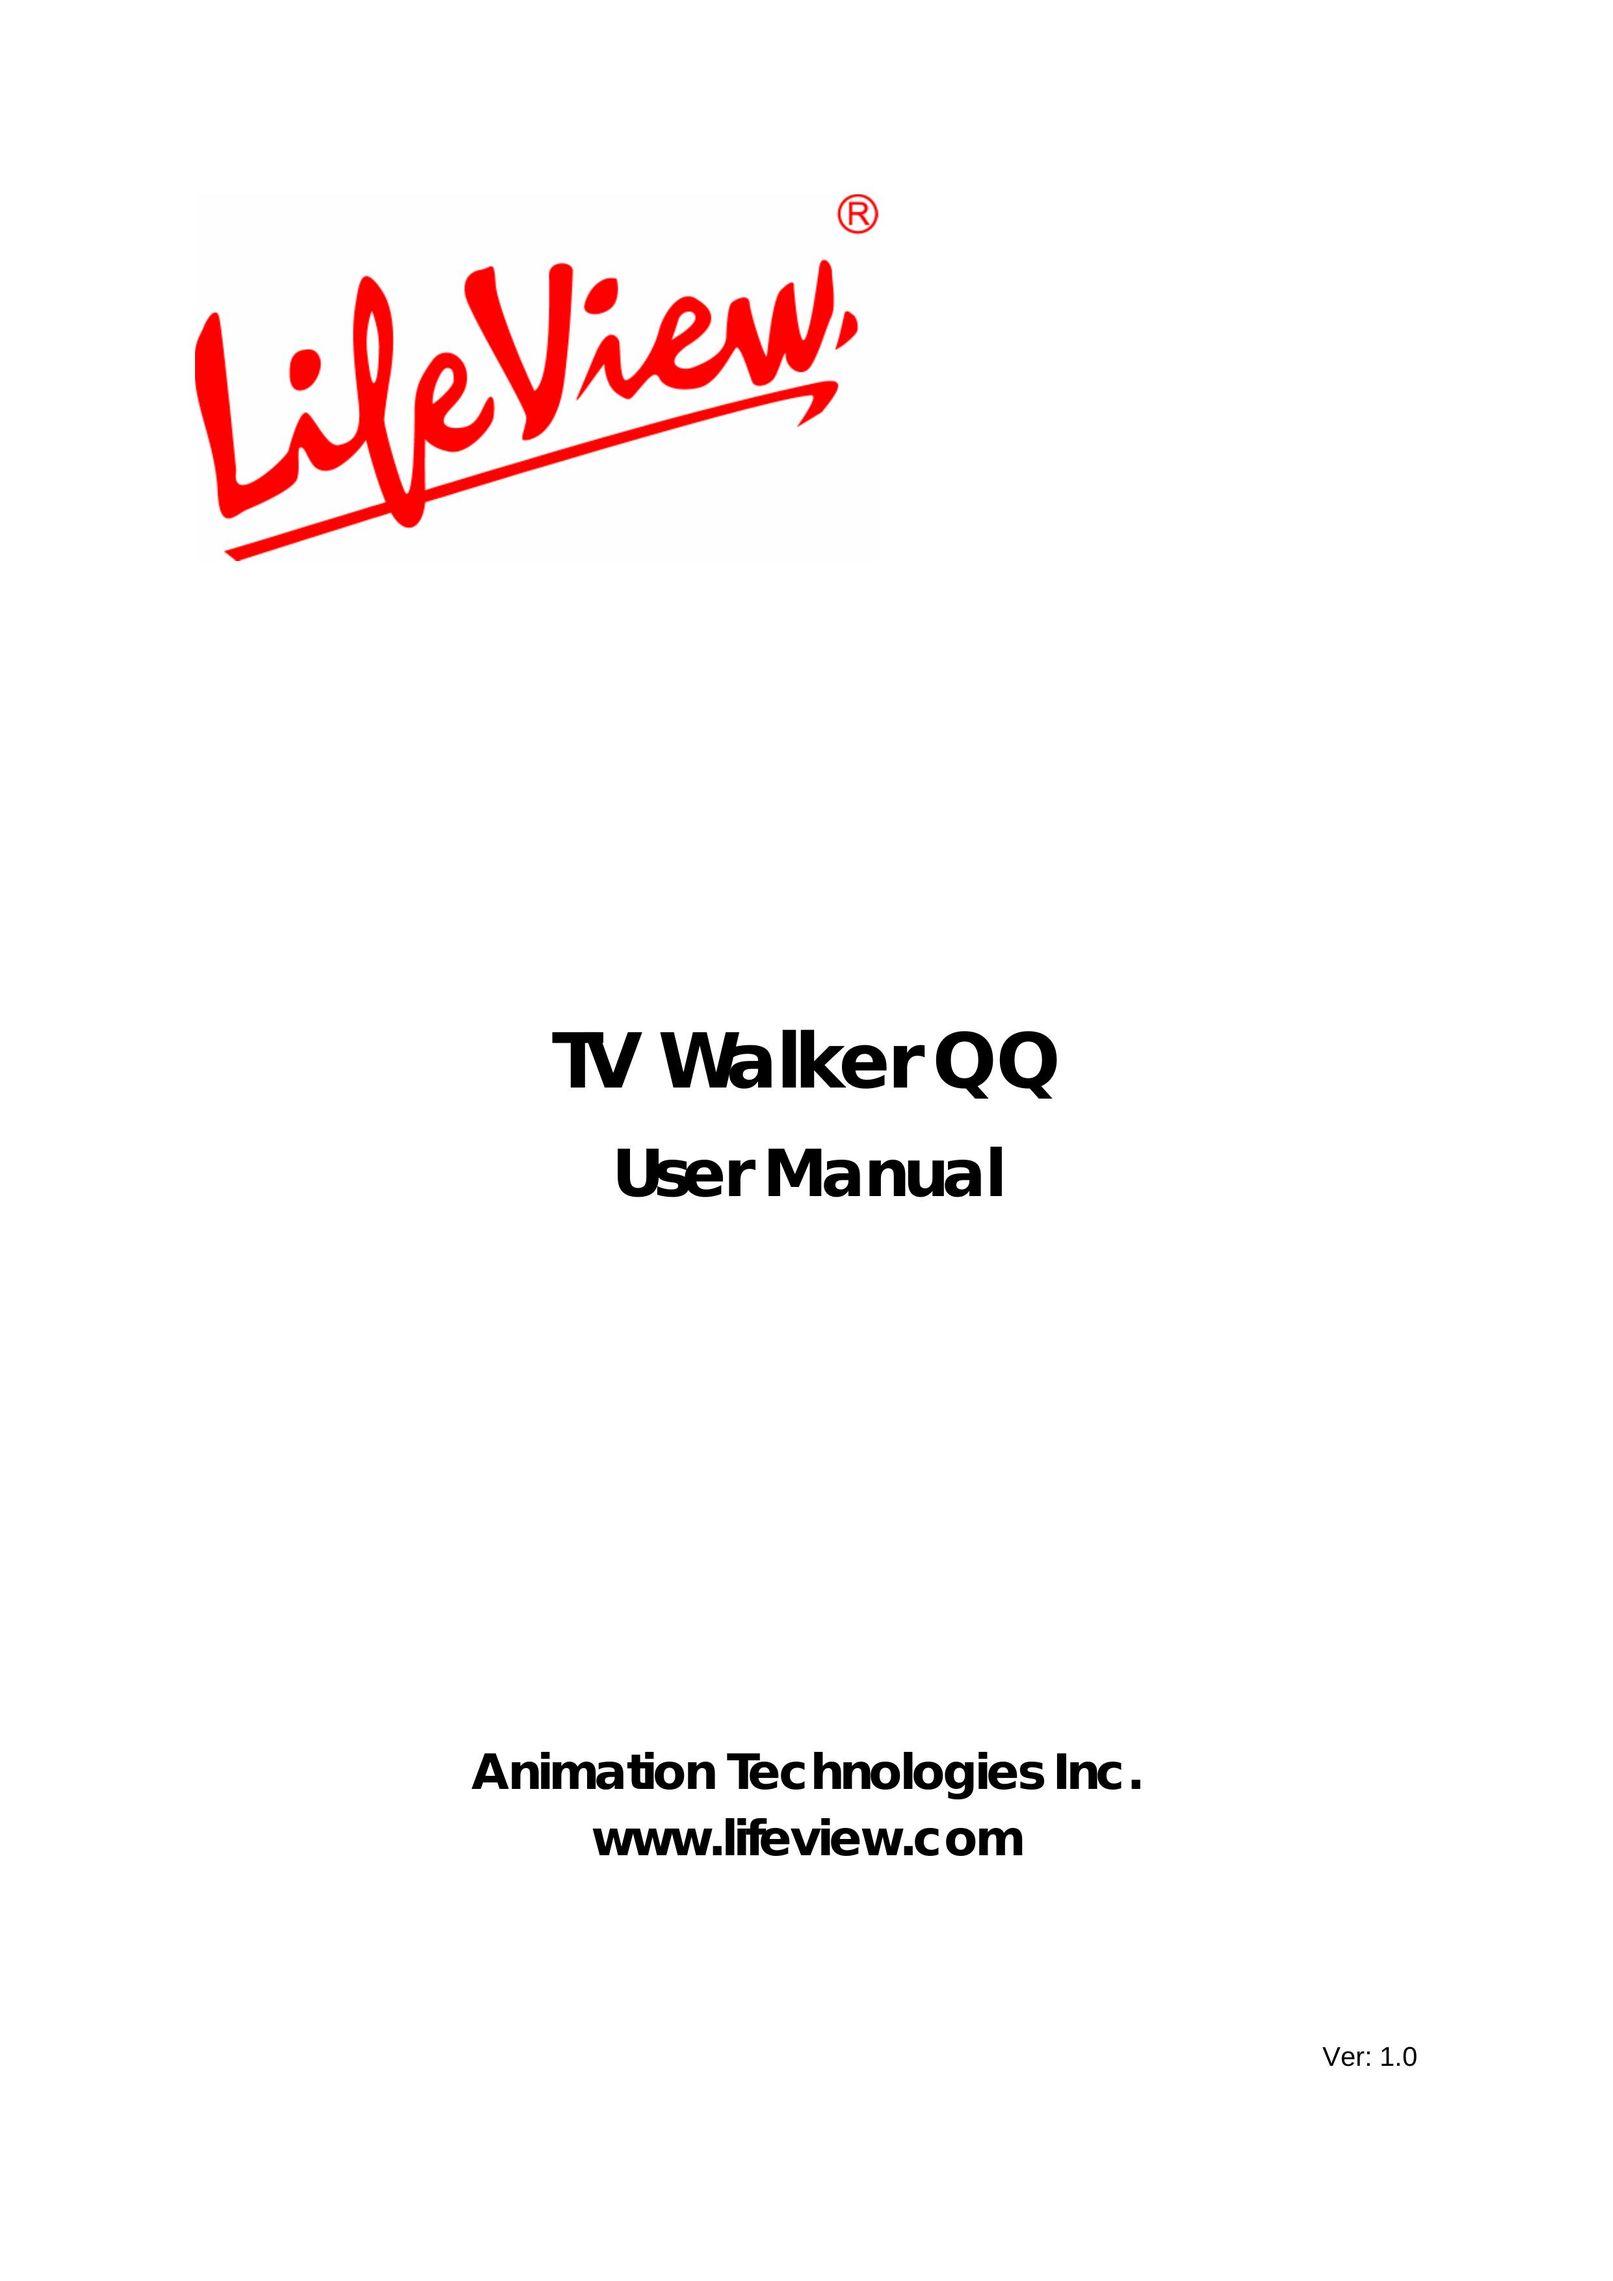 Animation Tech LifeView TV Walker QQ DVD Player User Manual